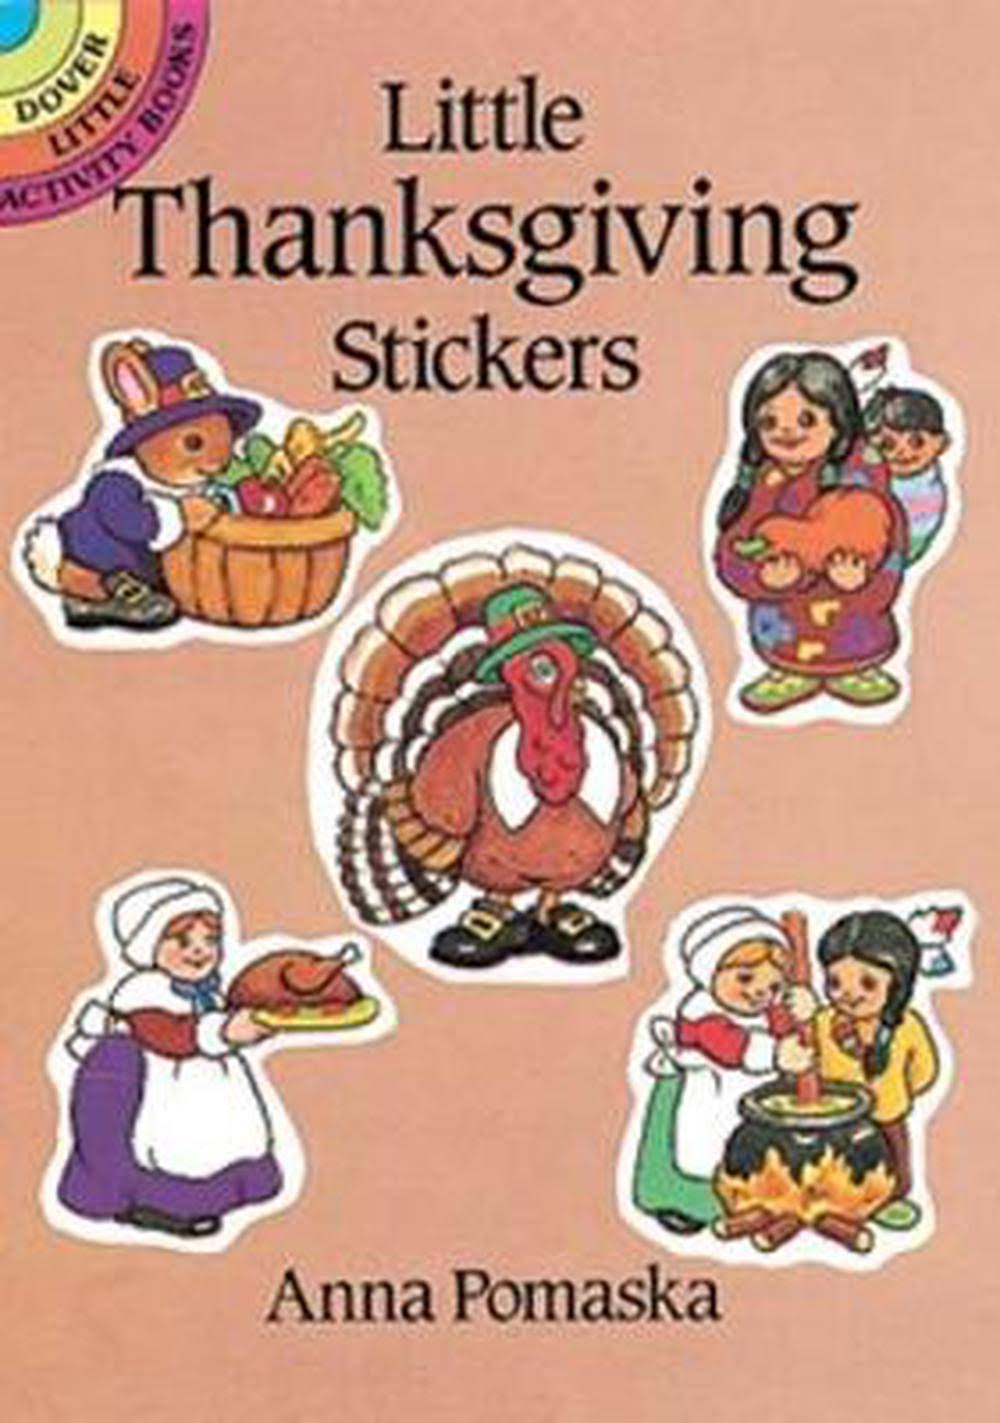 Little Thanksgiving Stickers [Book]